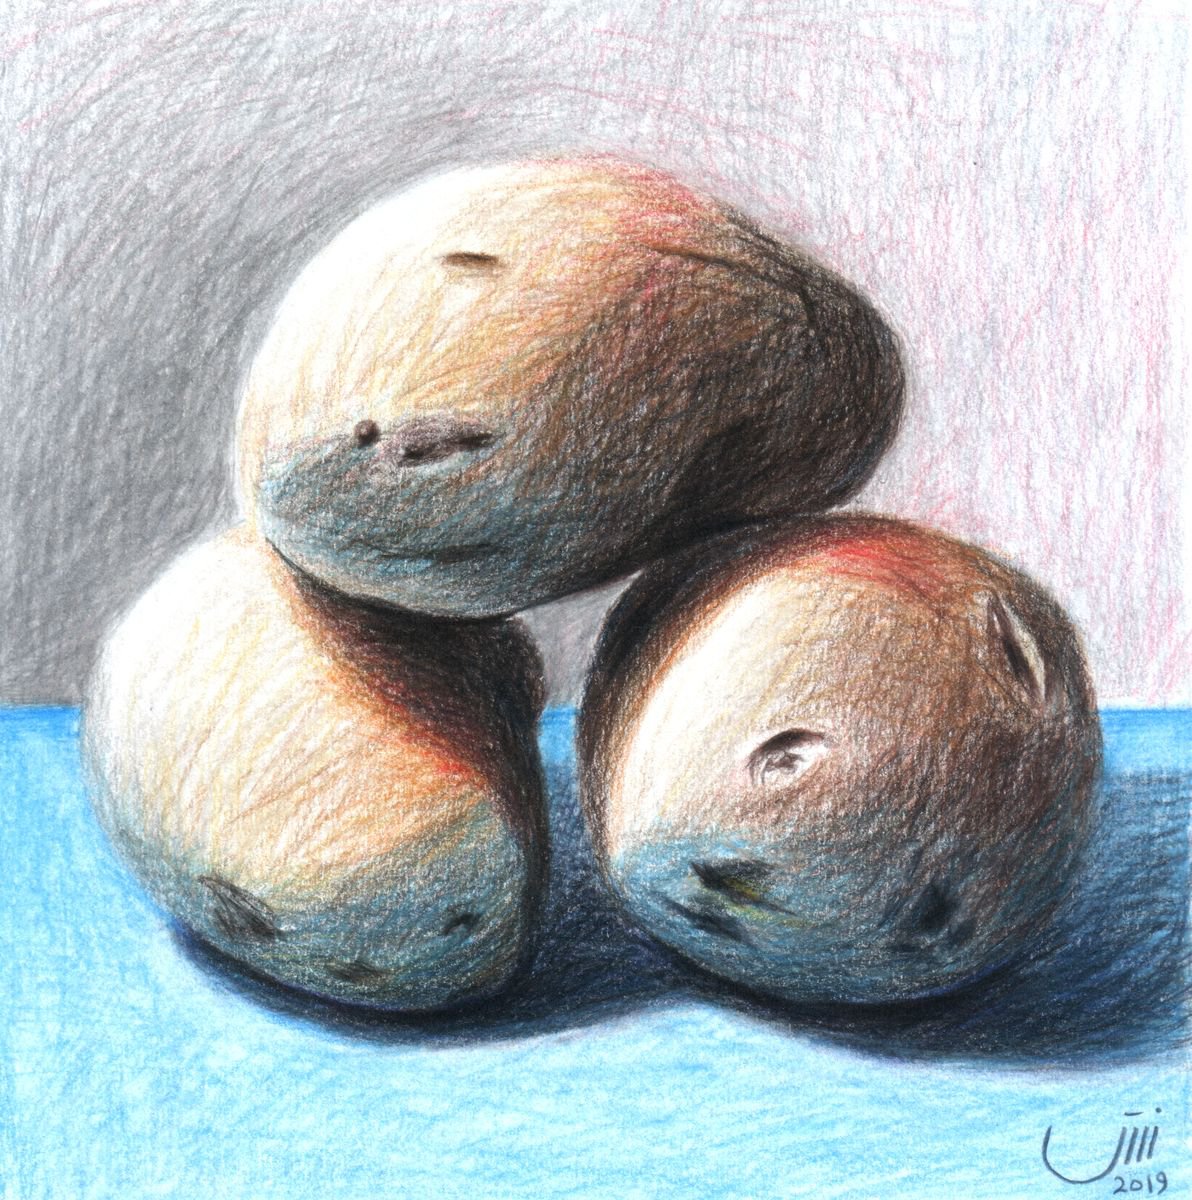 No.154, Potatoes by sedigheh zoghi